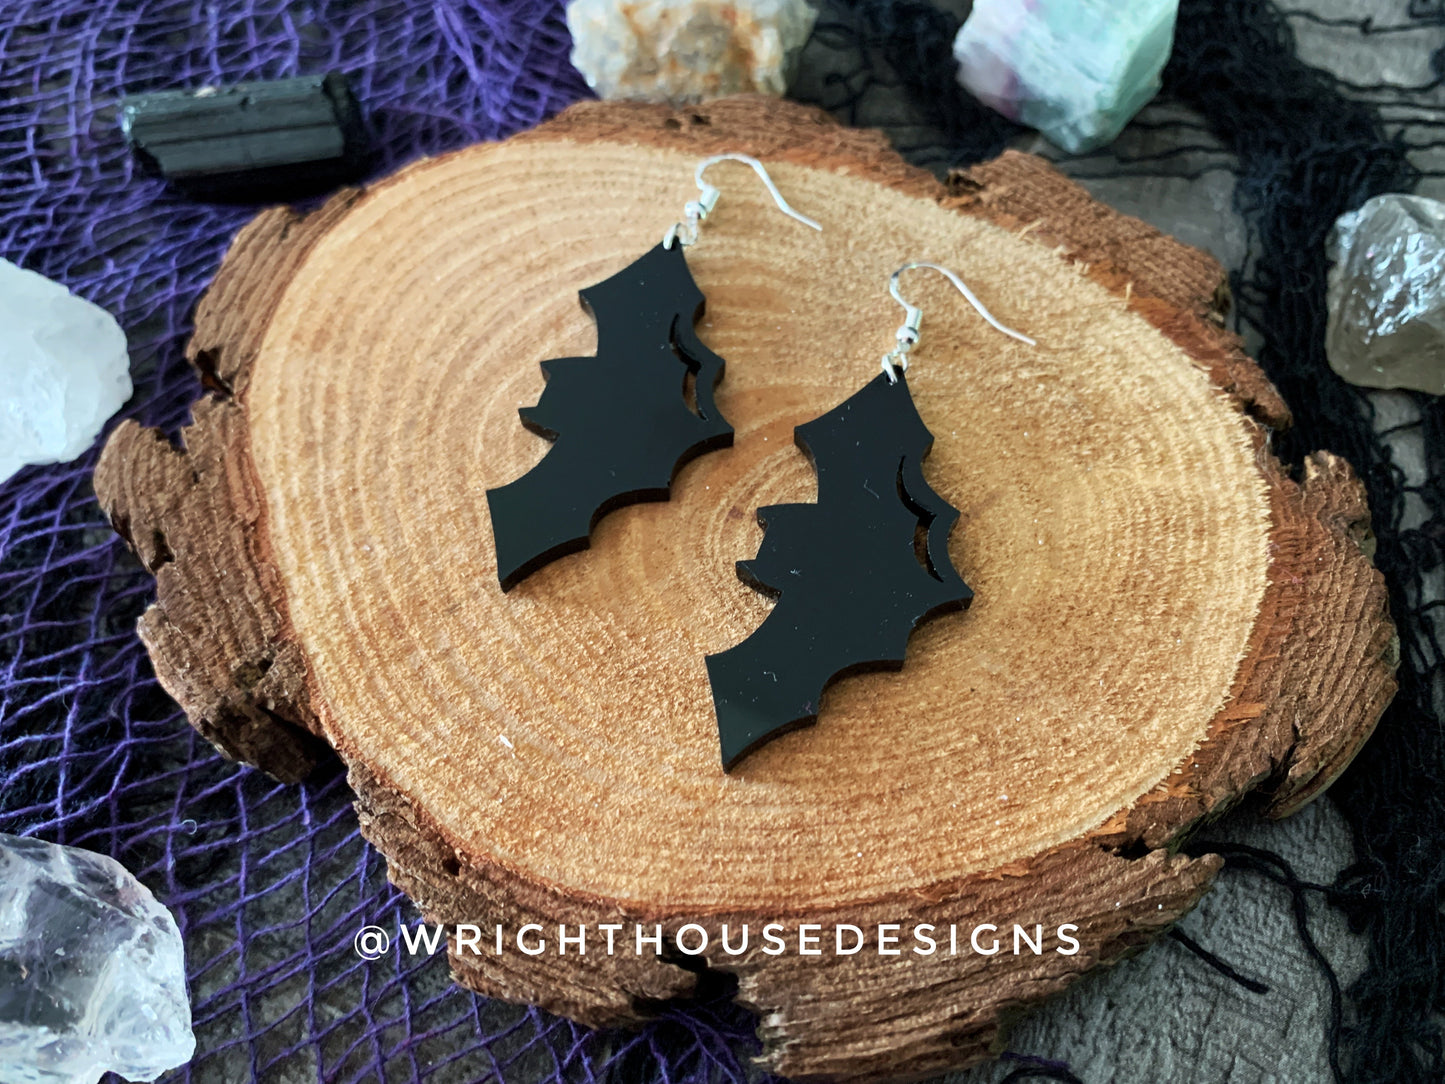 Witchy Gloss Black Bats - Cut Halloween Earrings - Gloss Black Acrylic Handmade Jewelry